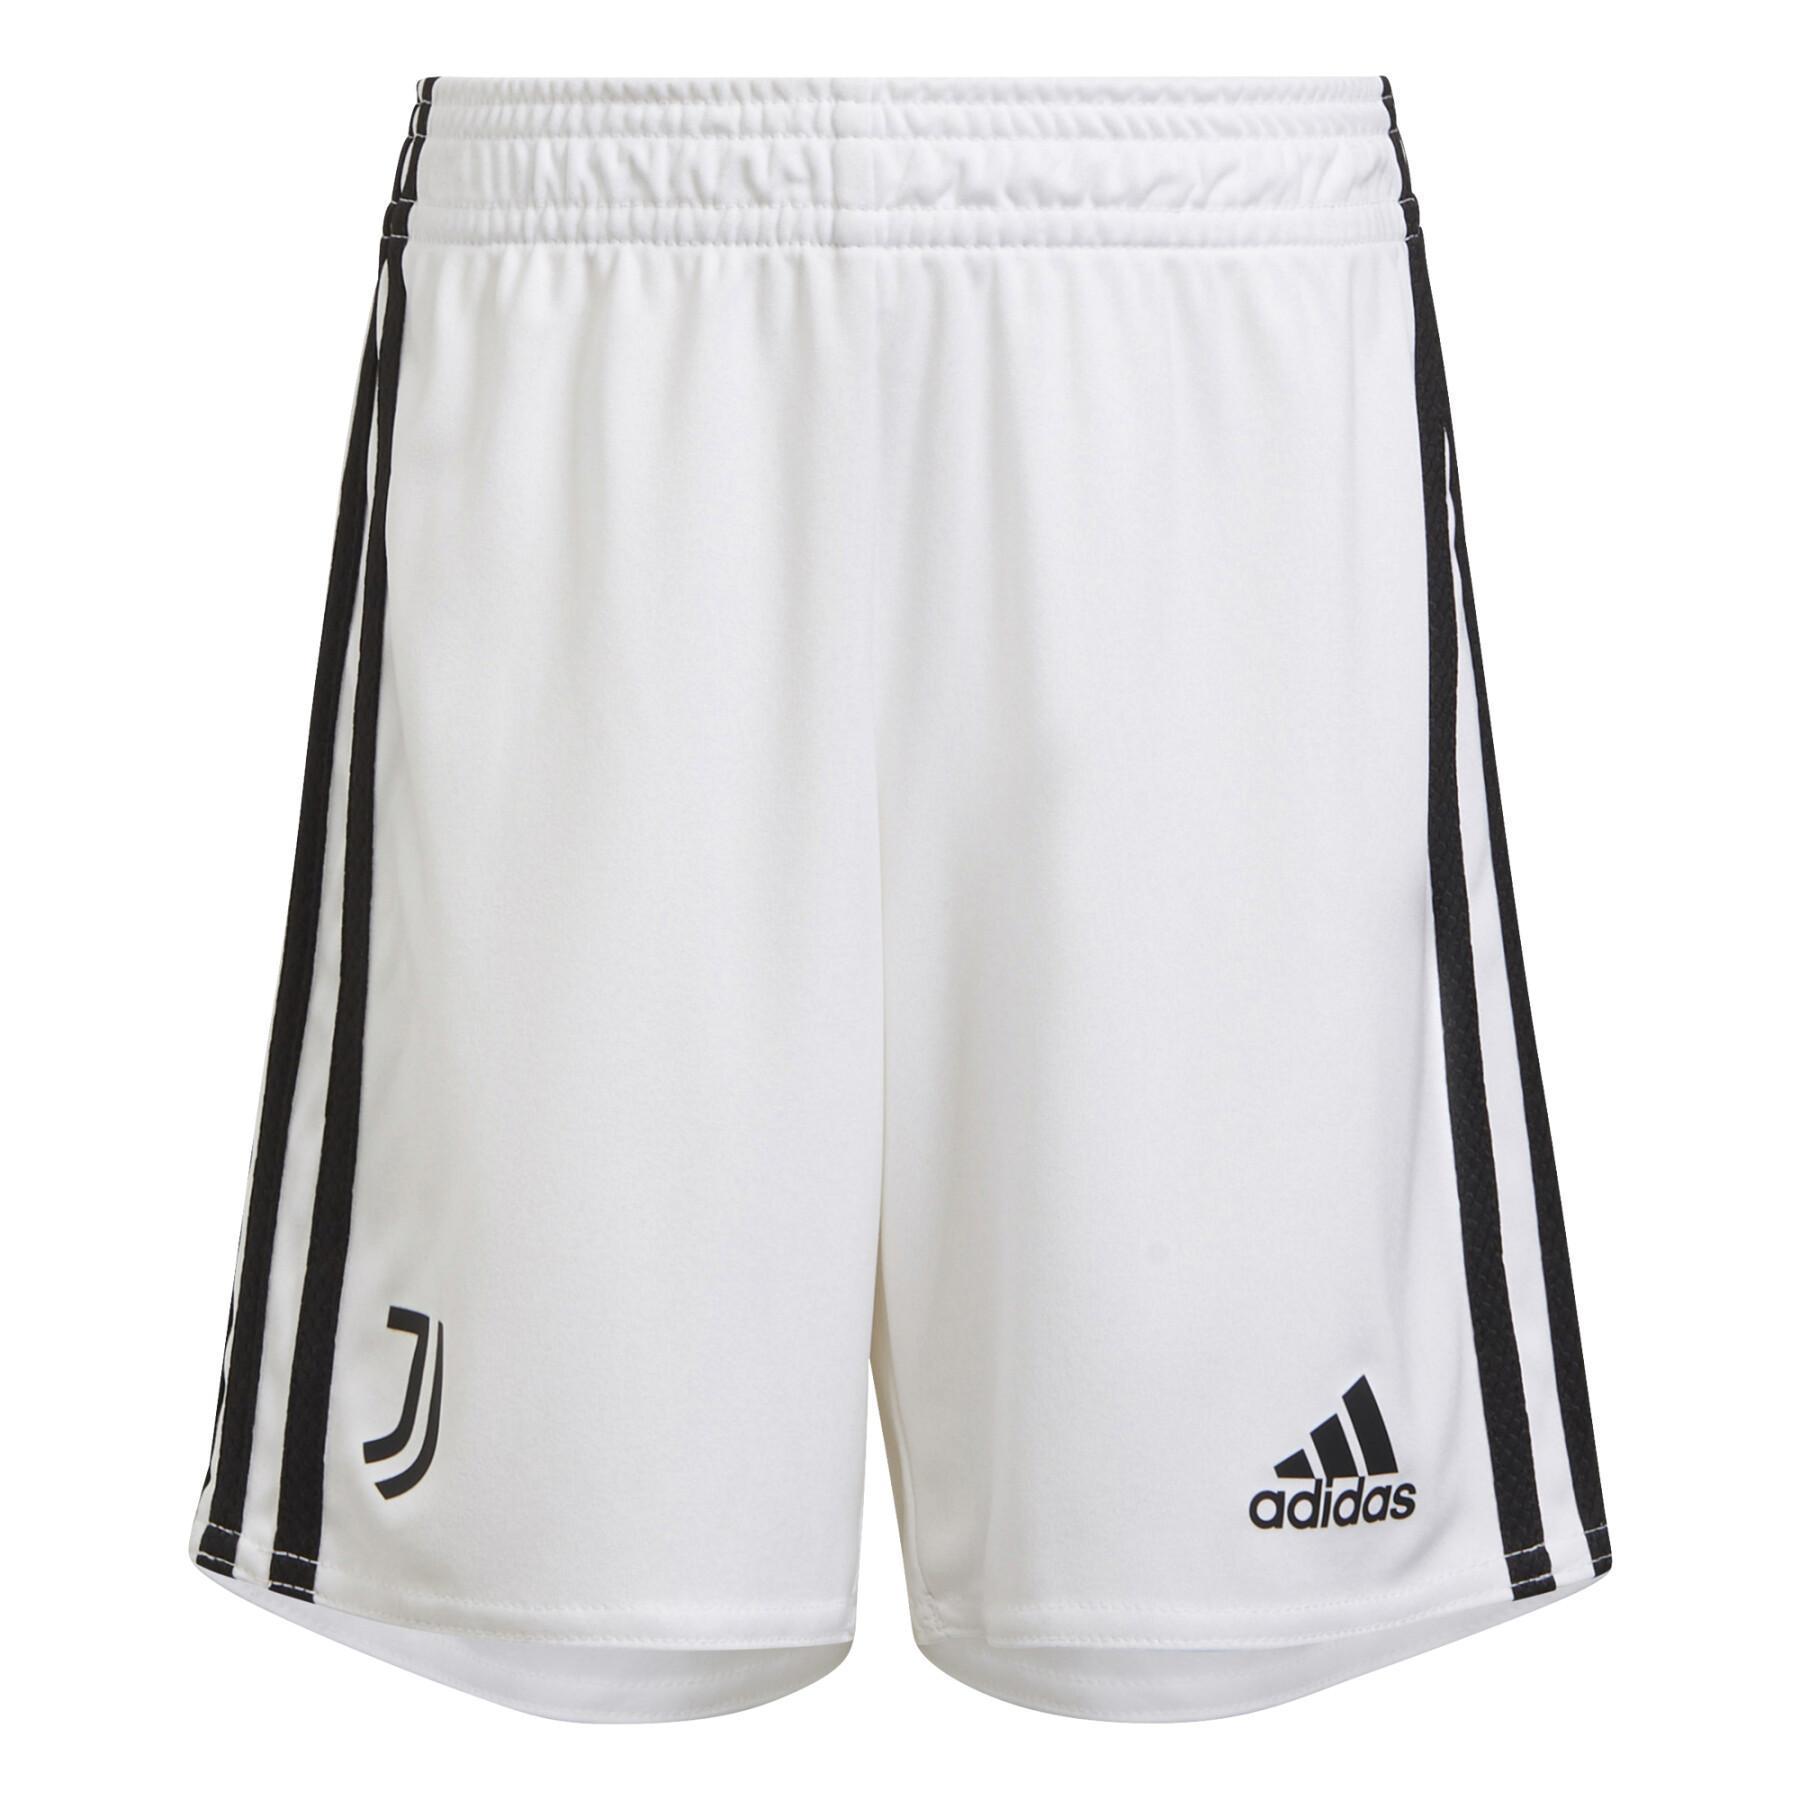 Mini home kit Juventus 2021/22